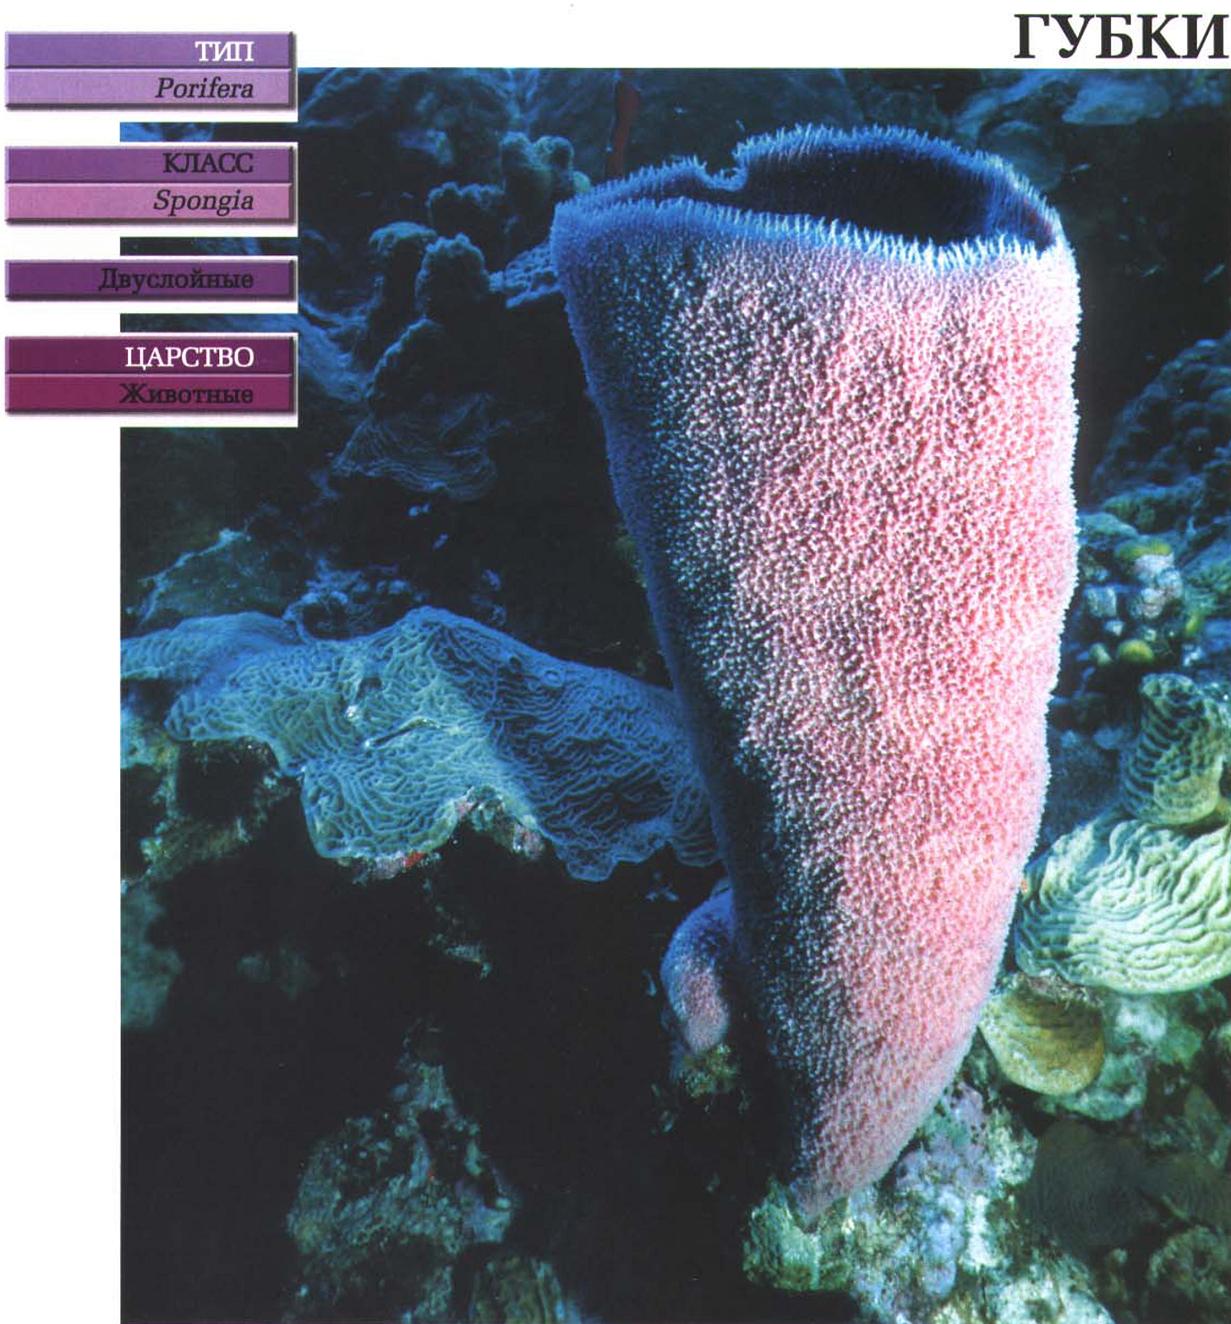 Систематика (научная классификация) губок. Класс Spongia, тип Porifera.